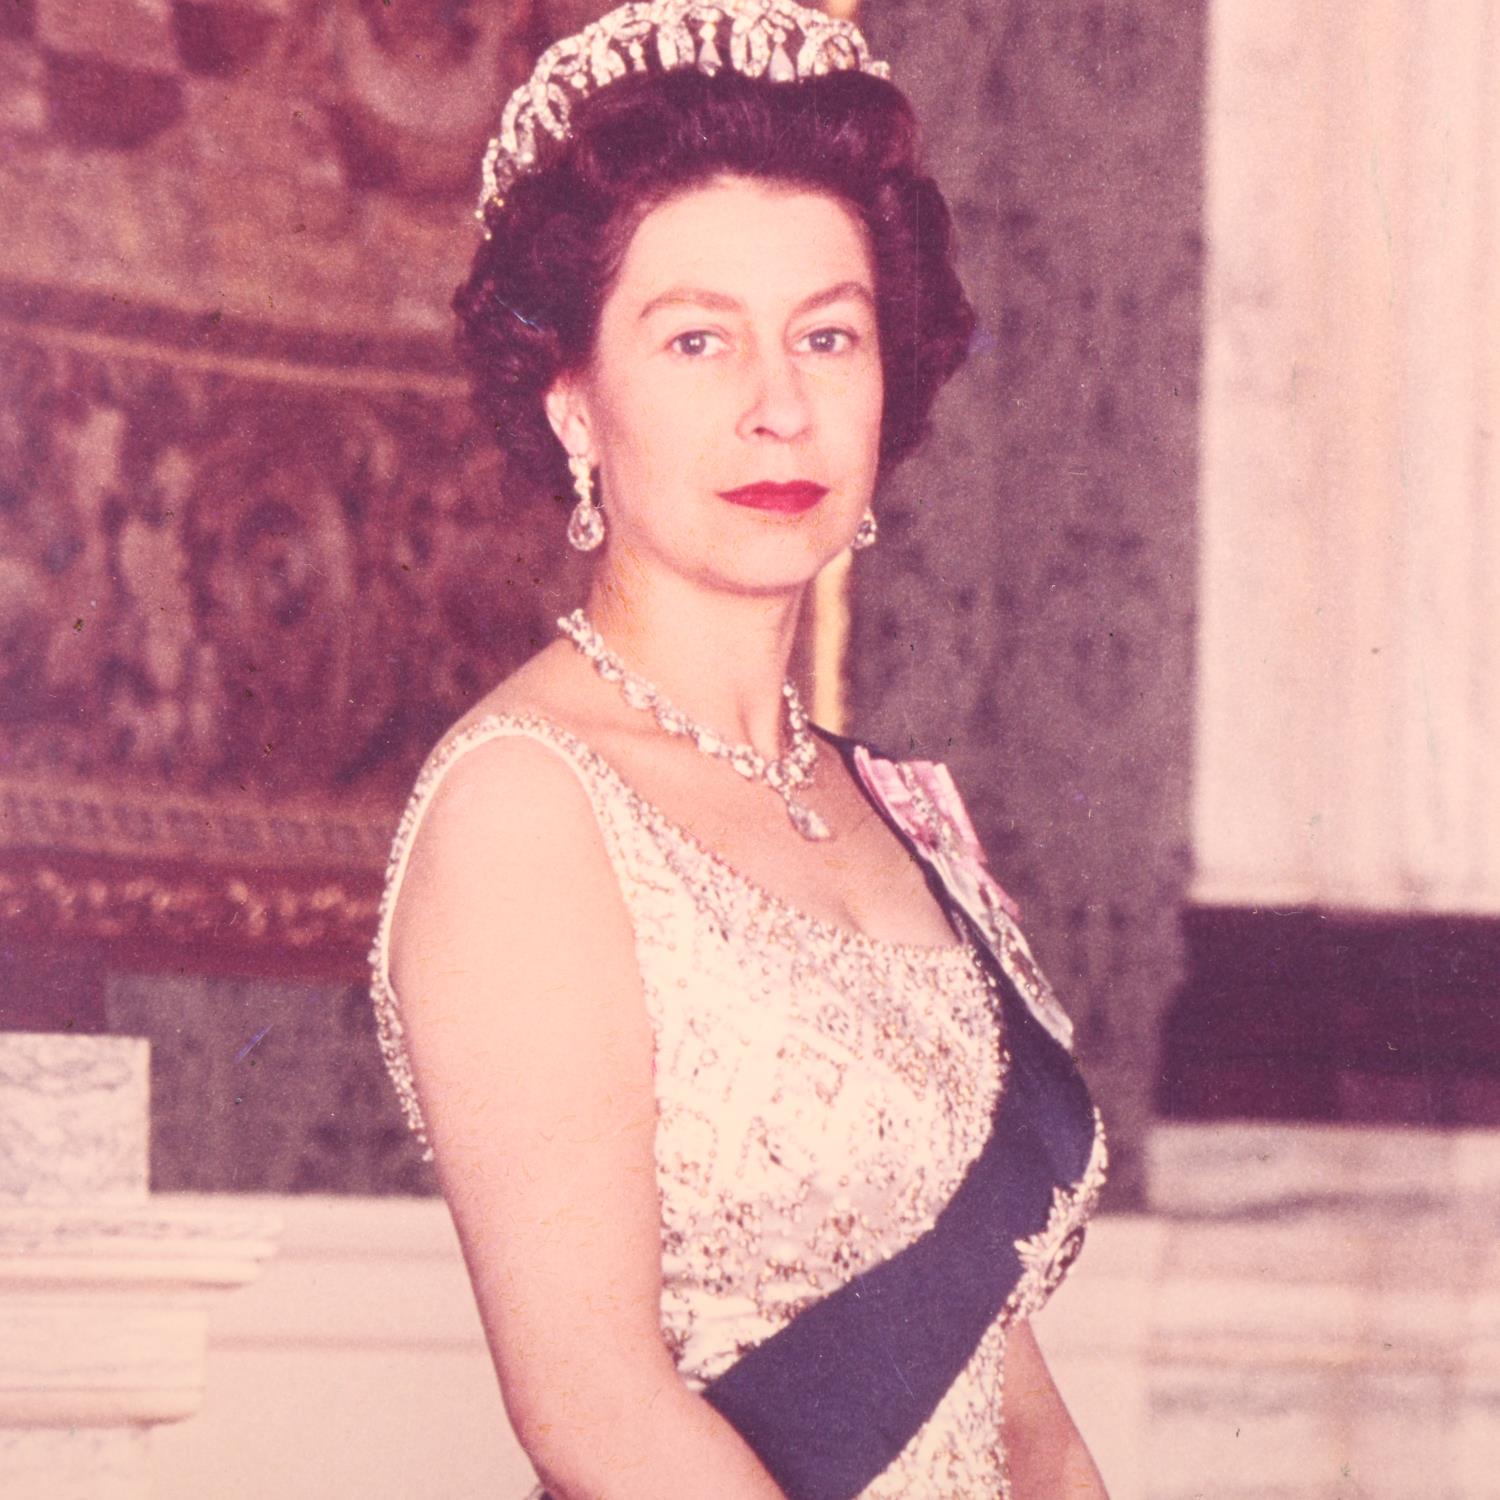 HRH Queen Elizabeth II, full length photographic portrait print, with original ink signature below - Image 3 of 3